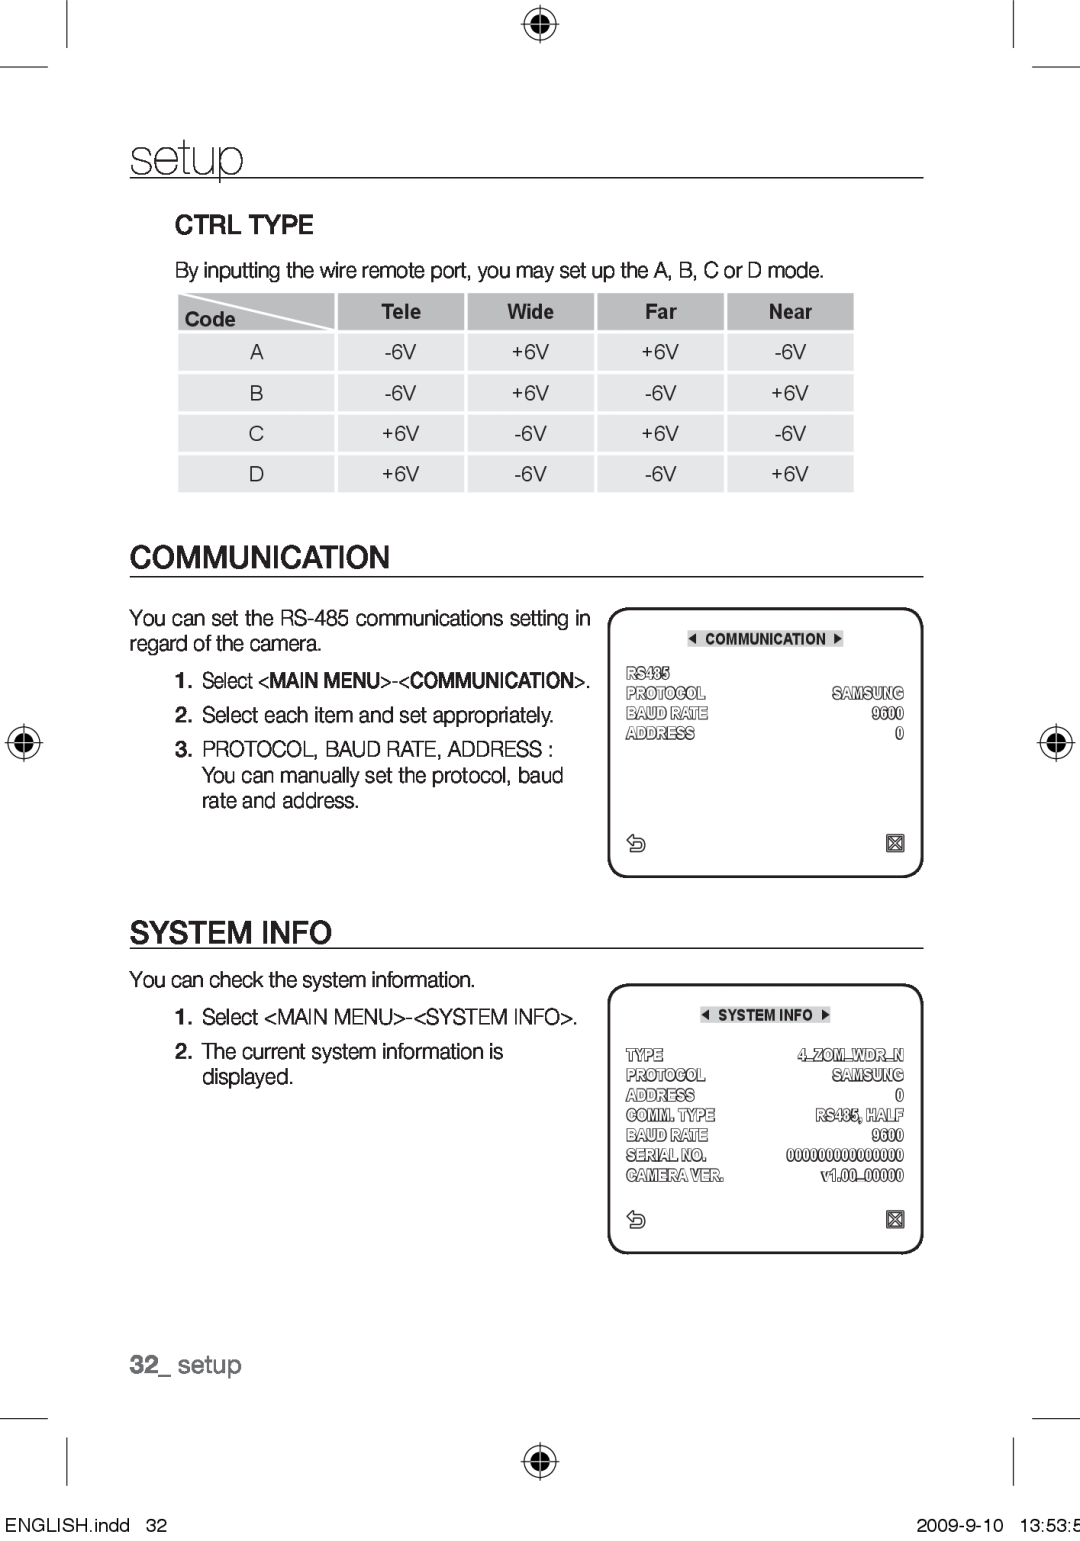 Samsung SCC-C4353P, SCC-C4355P, SCC-C4255P, SCC-C4253P user manual Communication, System Info, Ctrl Type, setup 